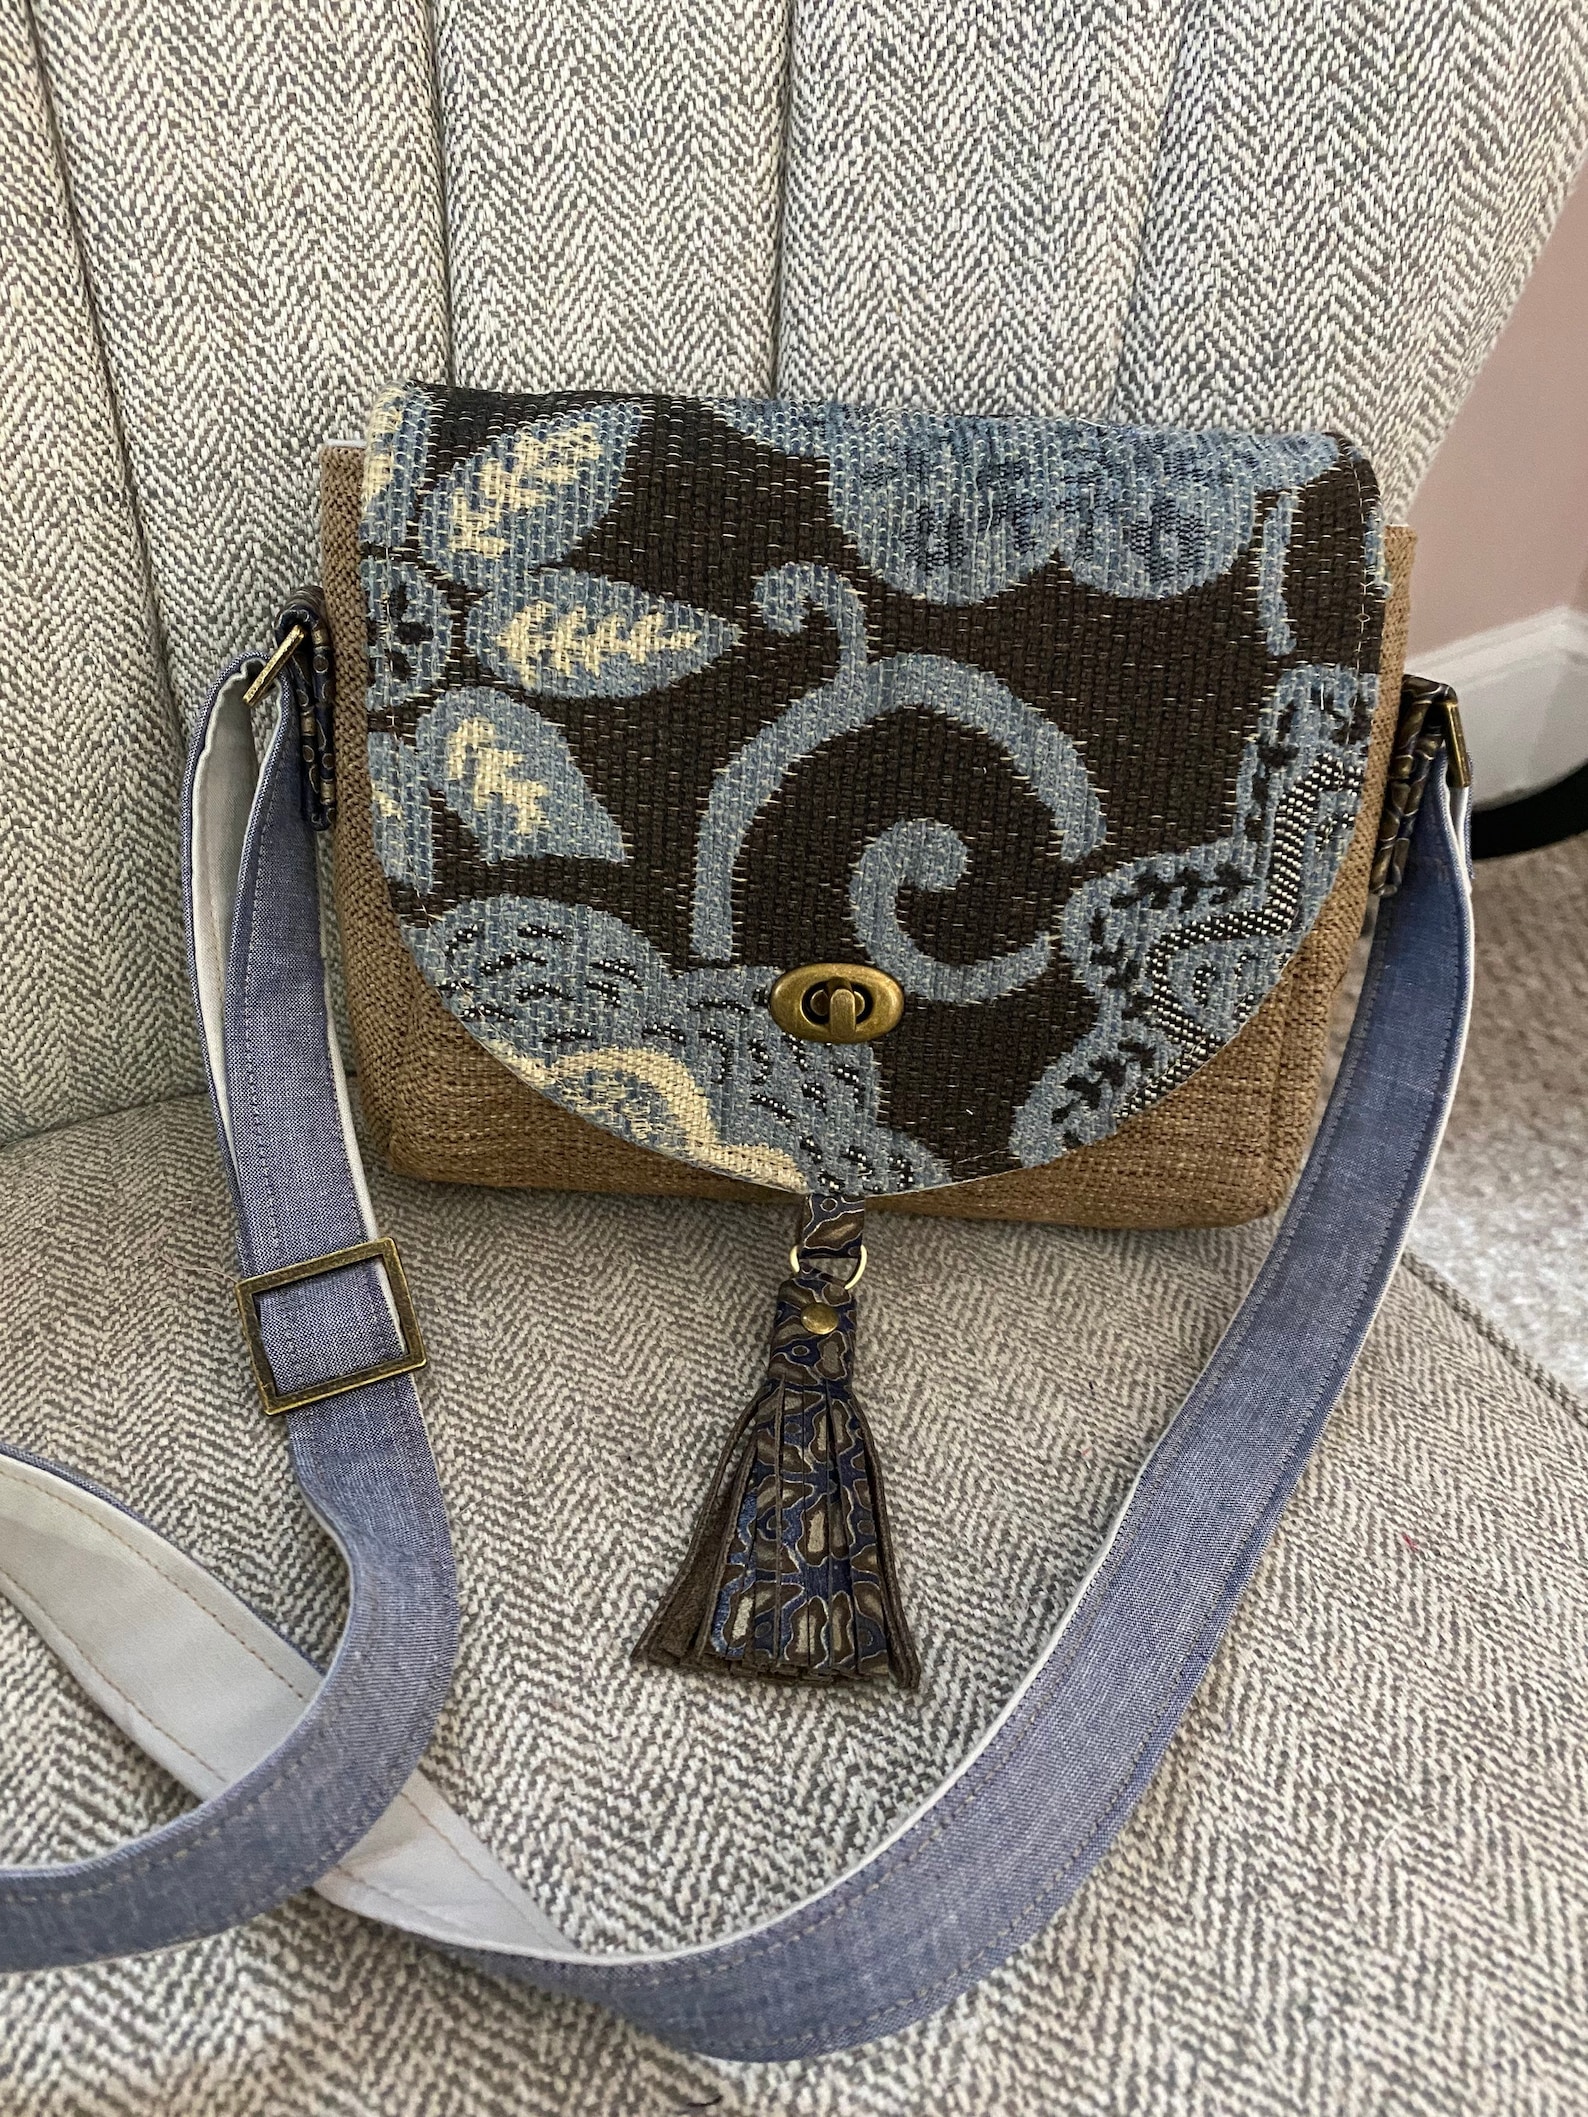 Sweet Pea Saddle Bag pattern by Blue Calla | Etsy